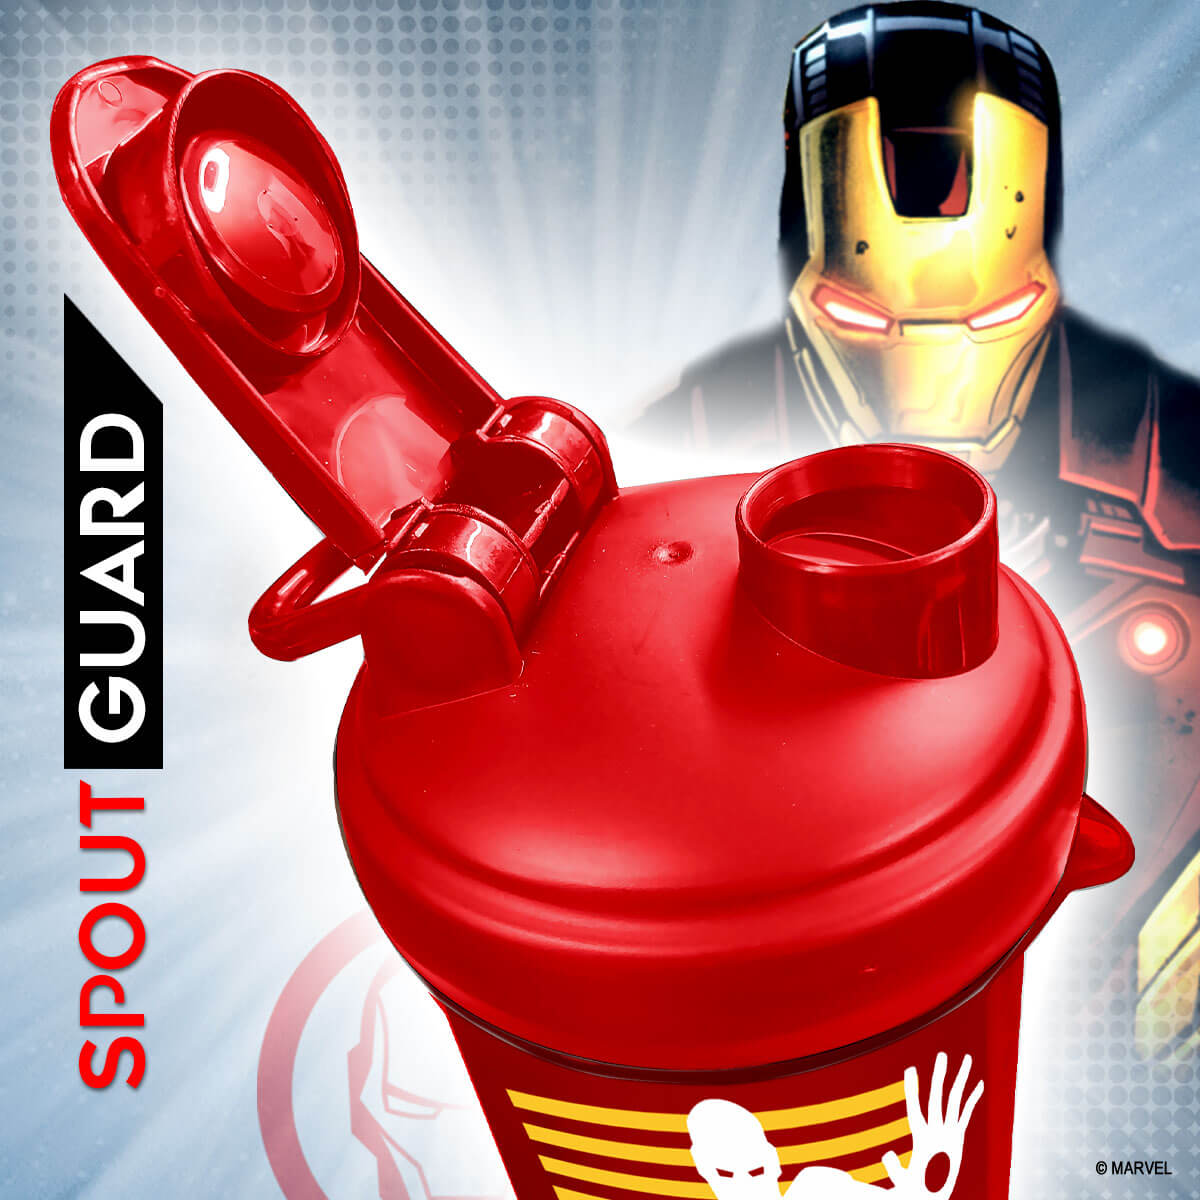 buy powermax x marvel msb-6s-im-red (600ml) ironman marvel edition protein shaker bottle with single storage